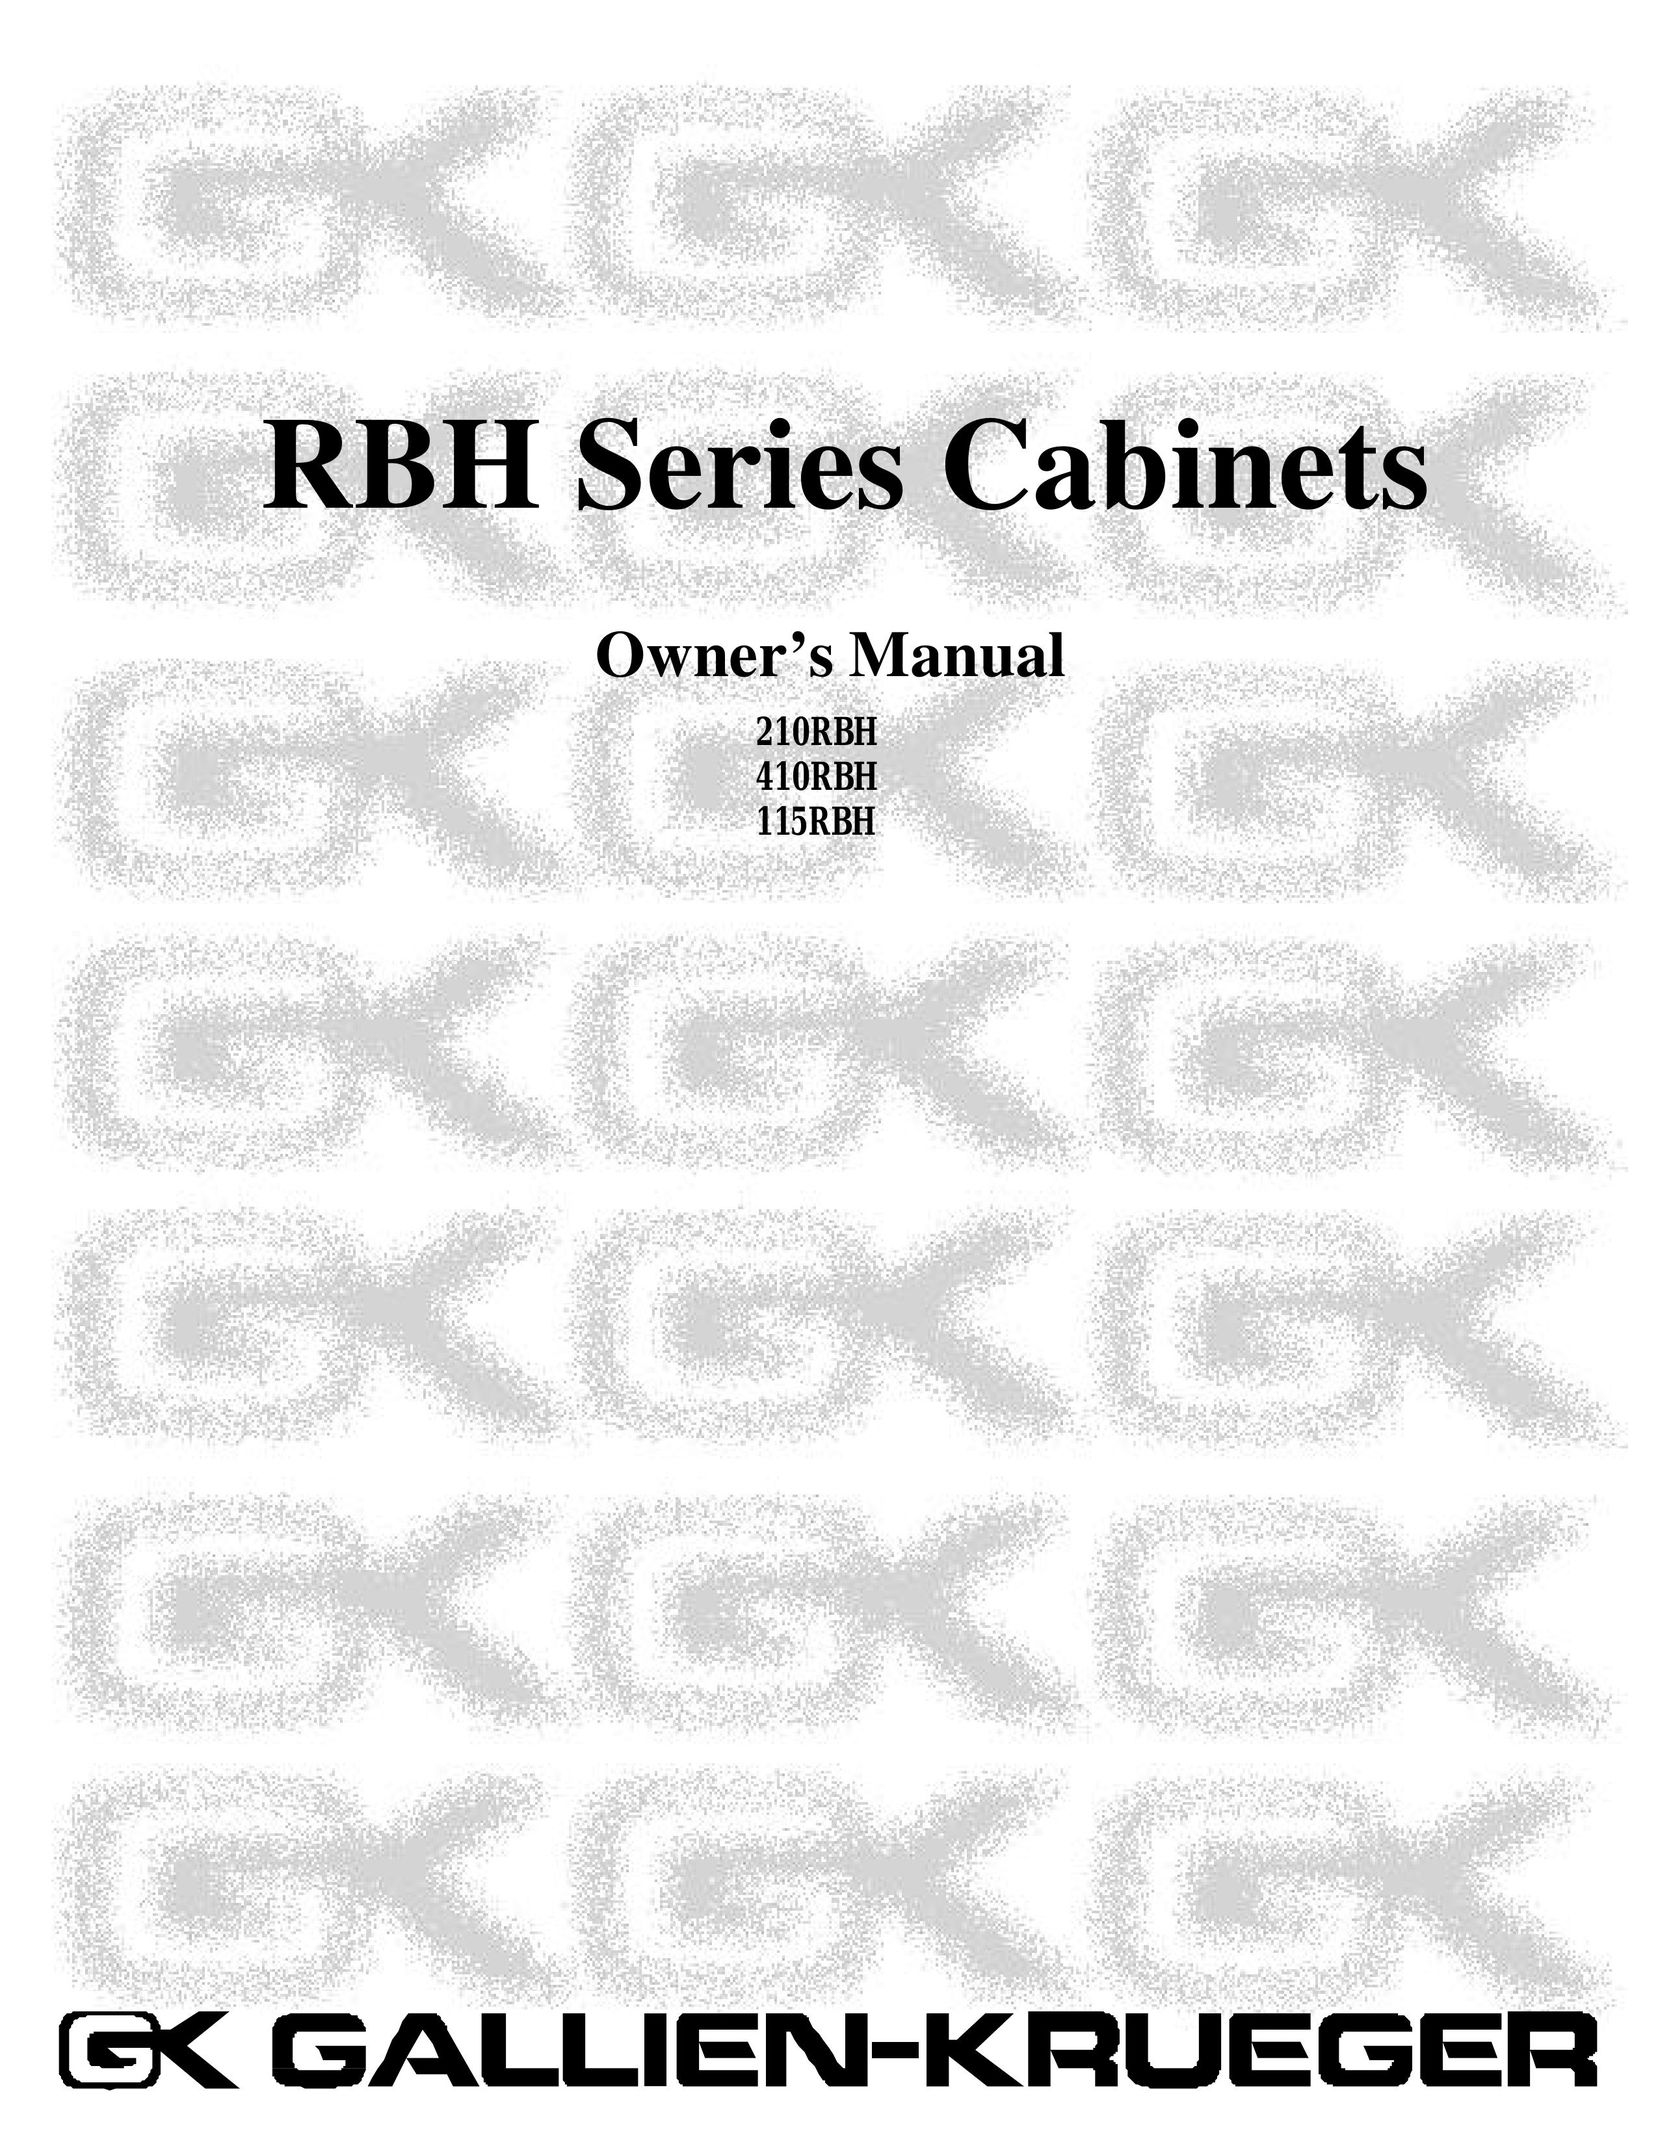 RBH Sound 115RBH Speaker User Manual